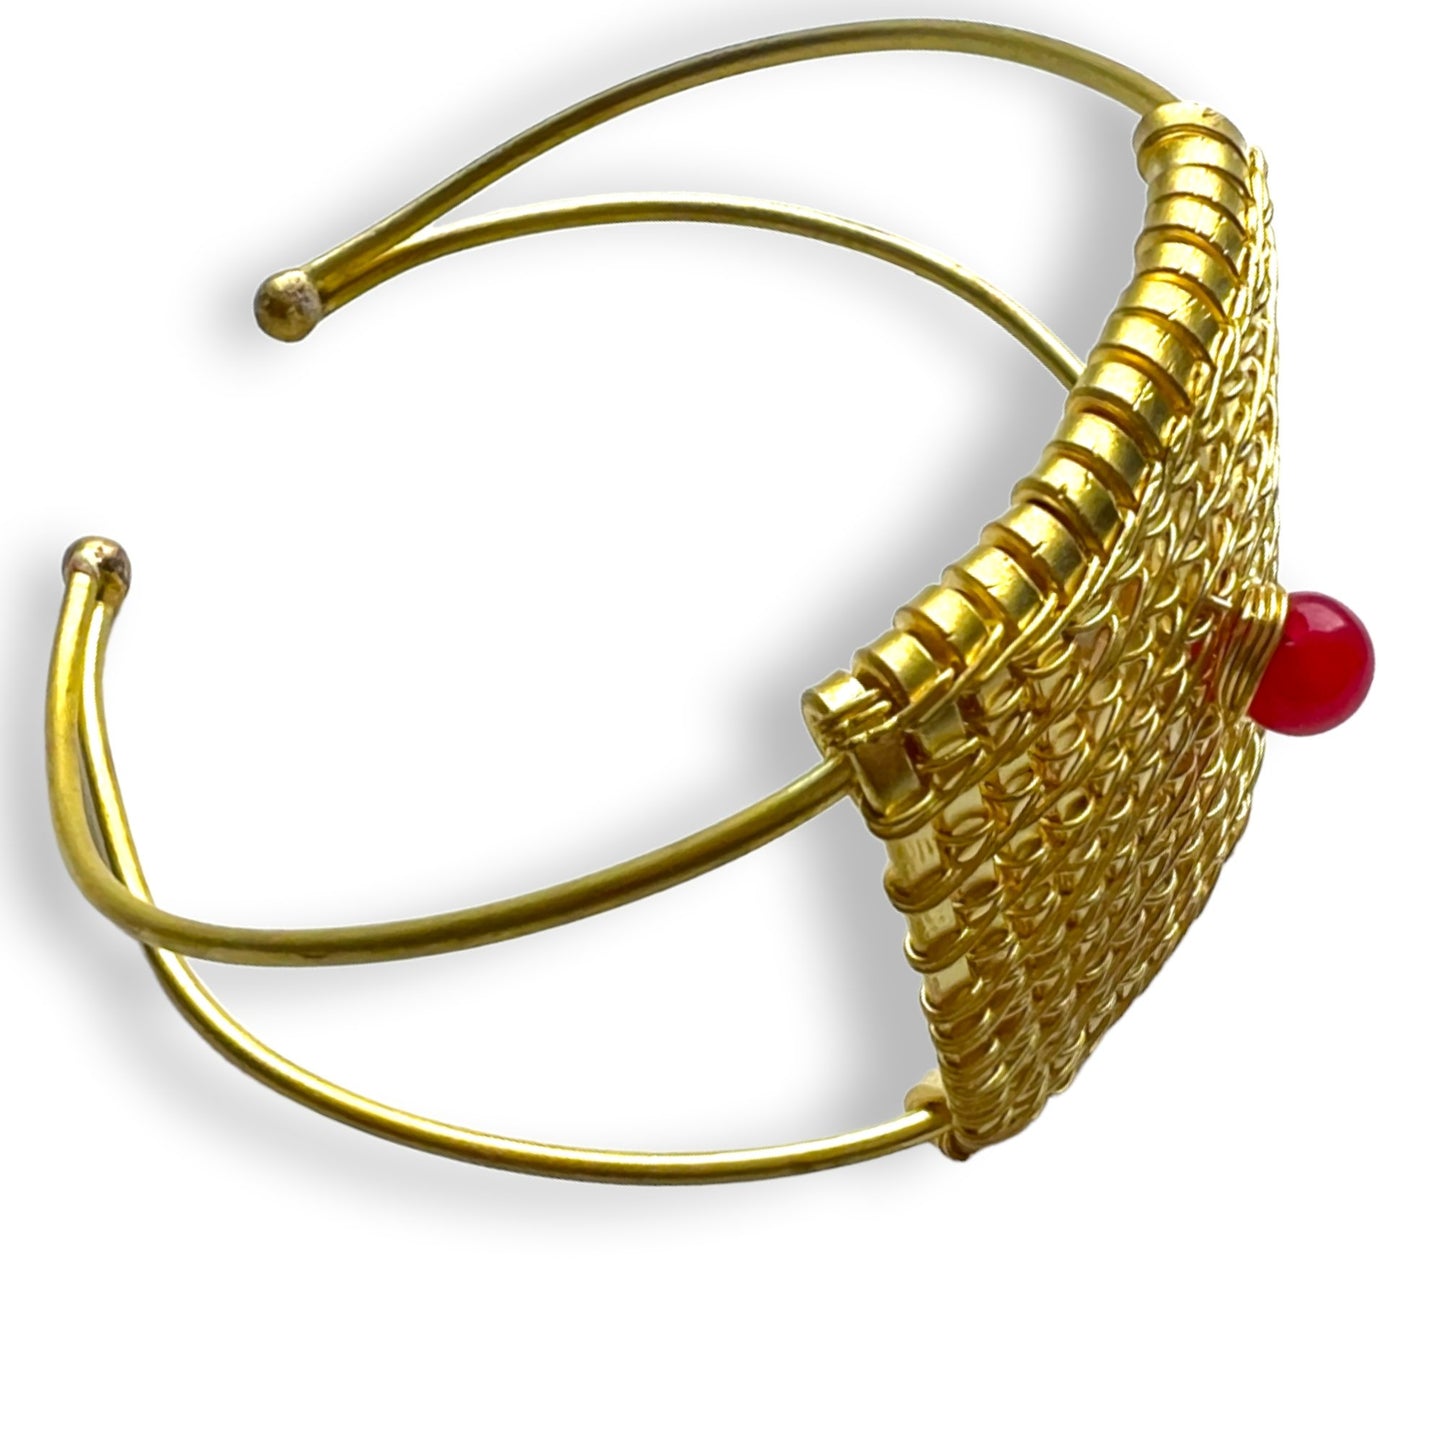 Woven brass cuff bracelet with carnelian center - Sundara Joon